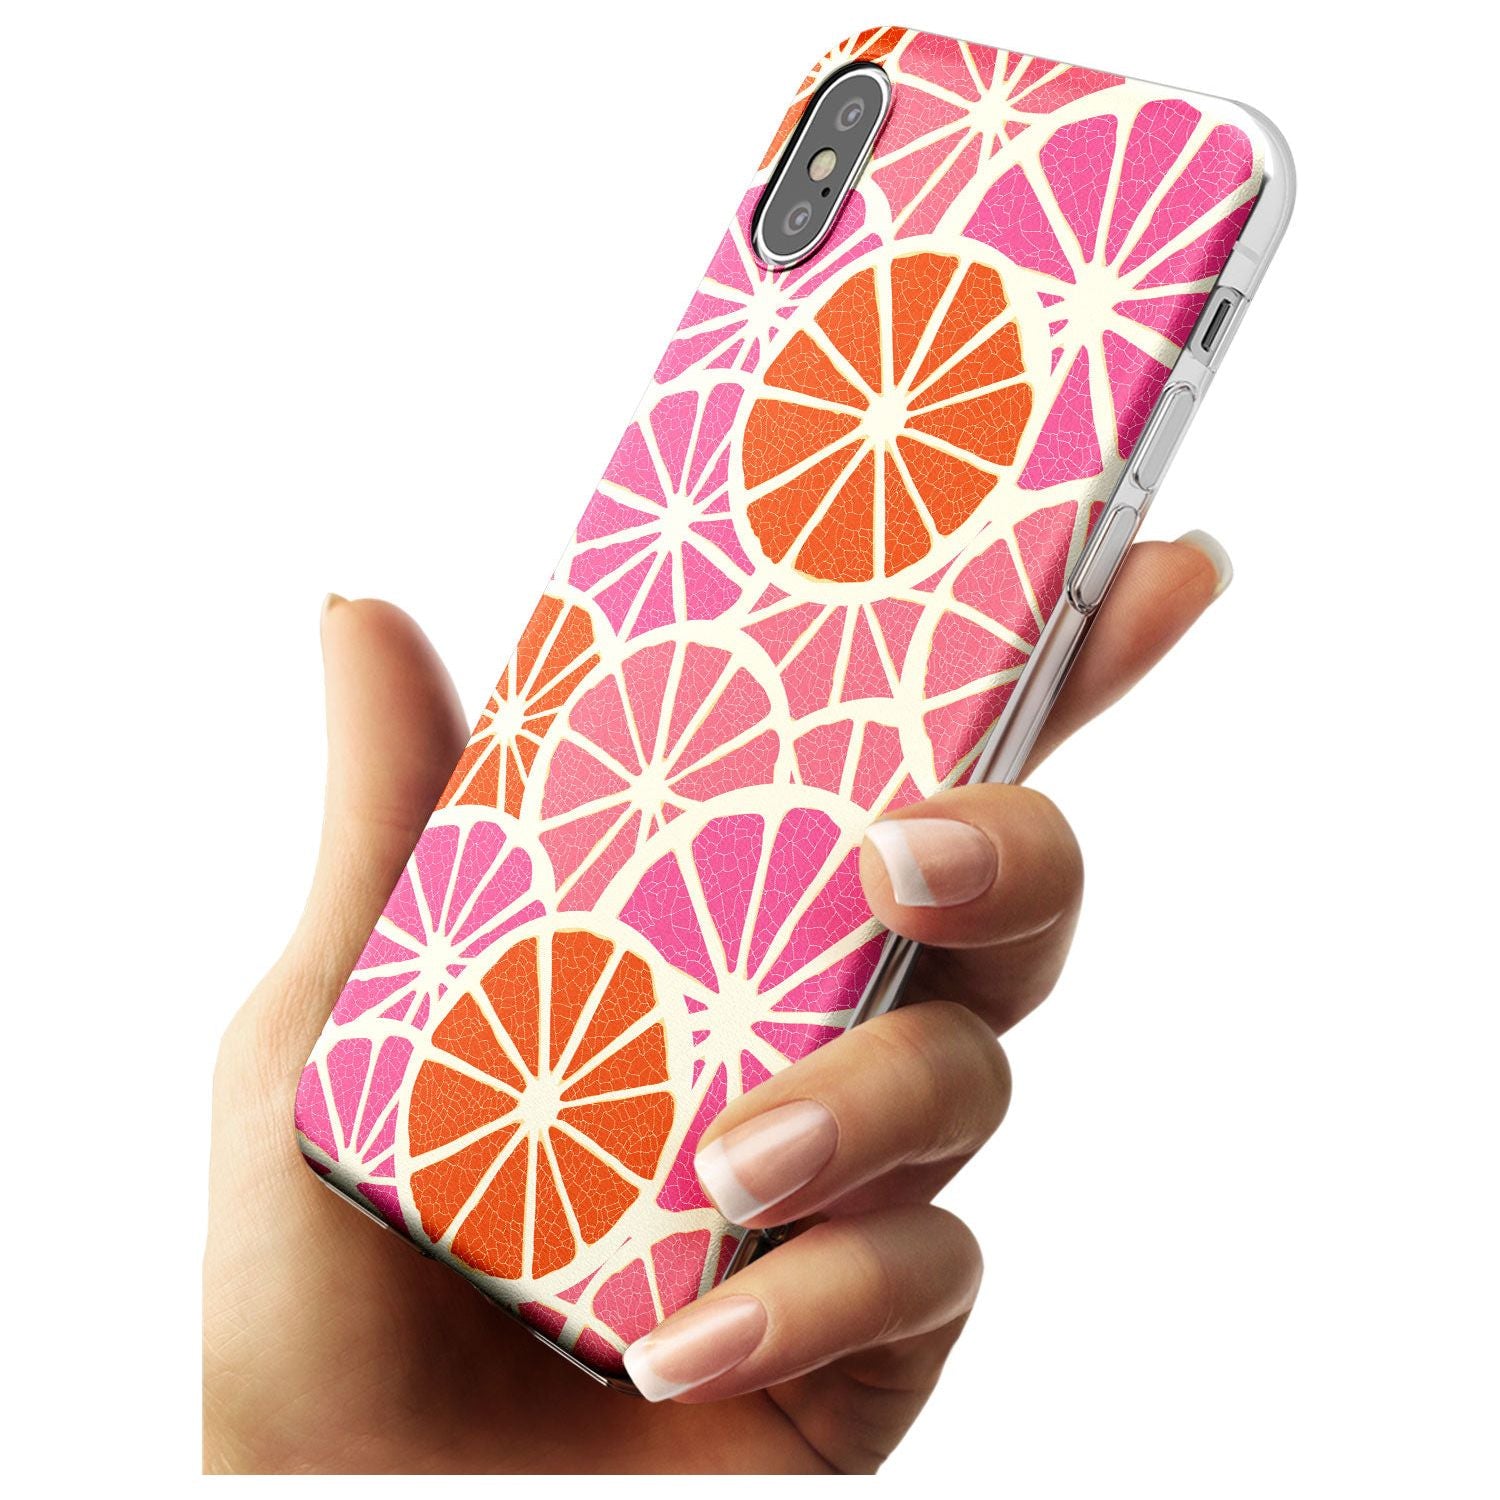 Citrus Slices Black Impact Phone Case for iPhone X XS Max XR